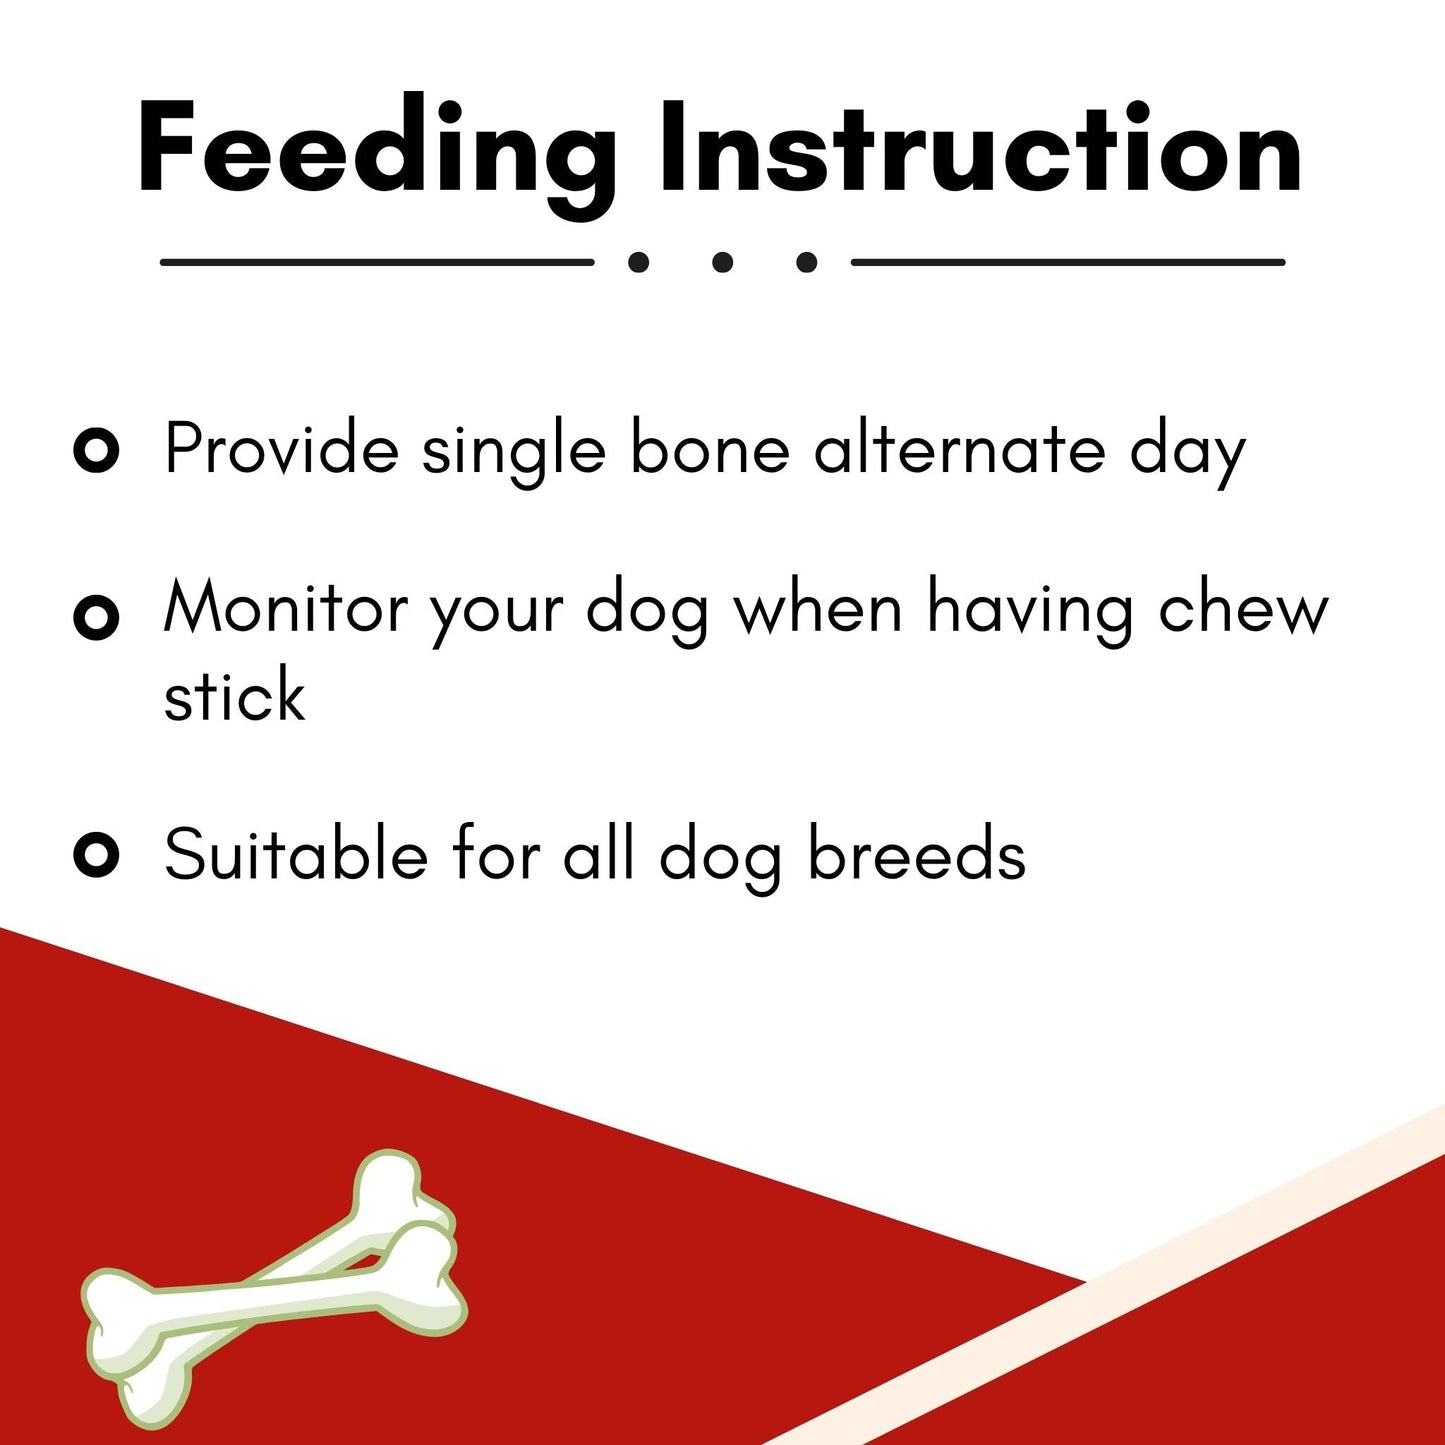 Foodie Puppies Chompsters Rawhide Bone for Dogs - 3inch Bone, 5Kg